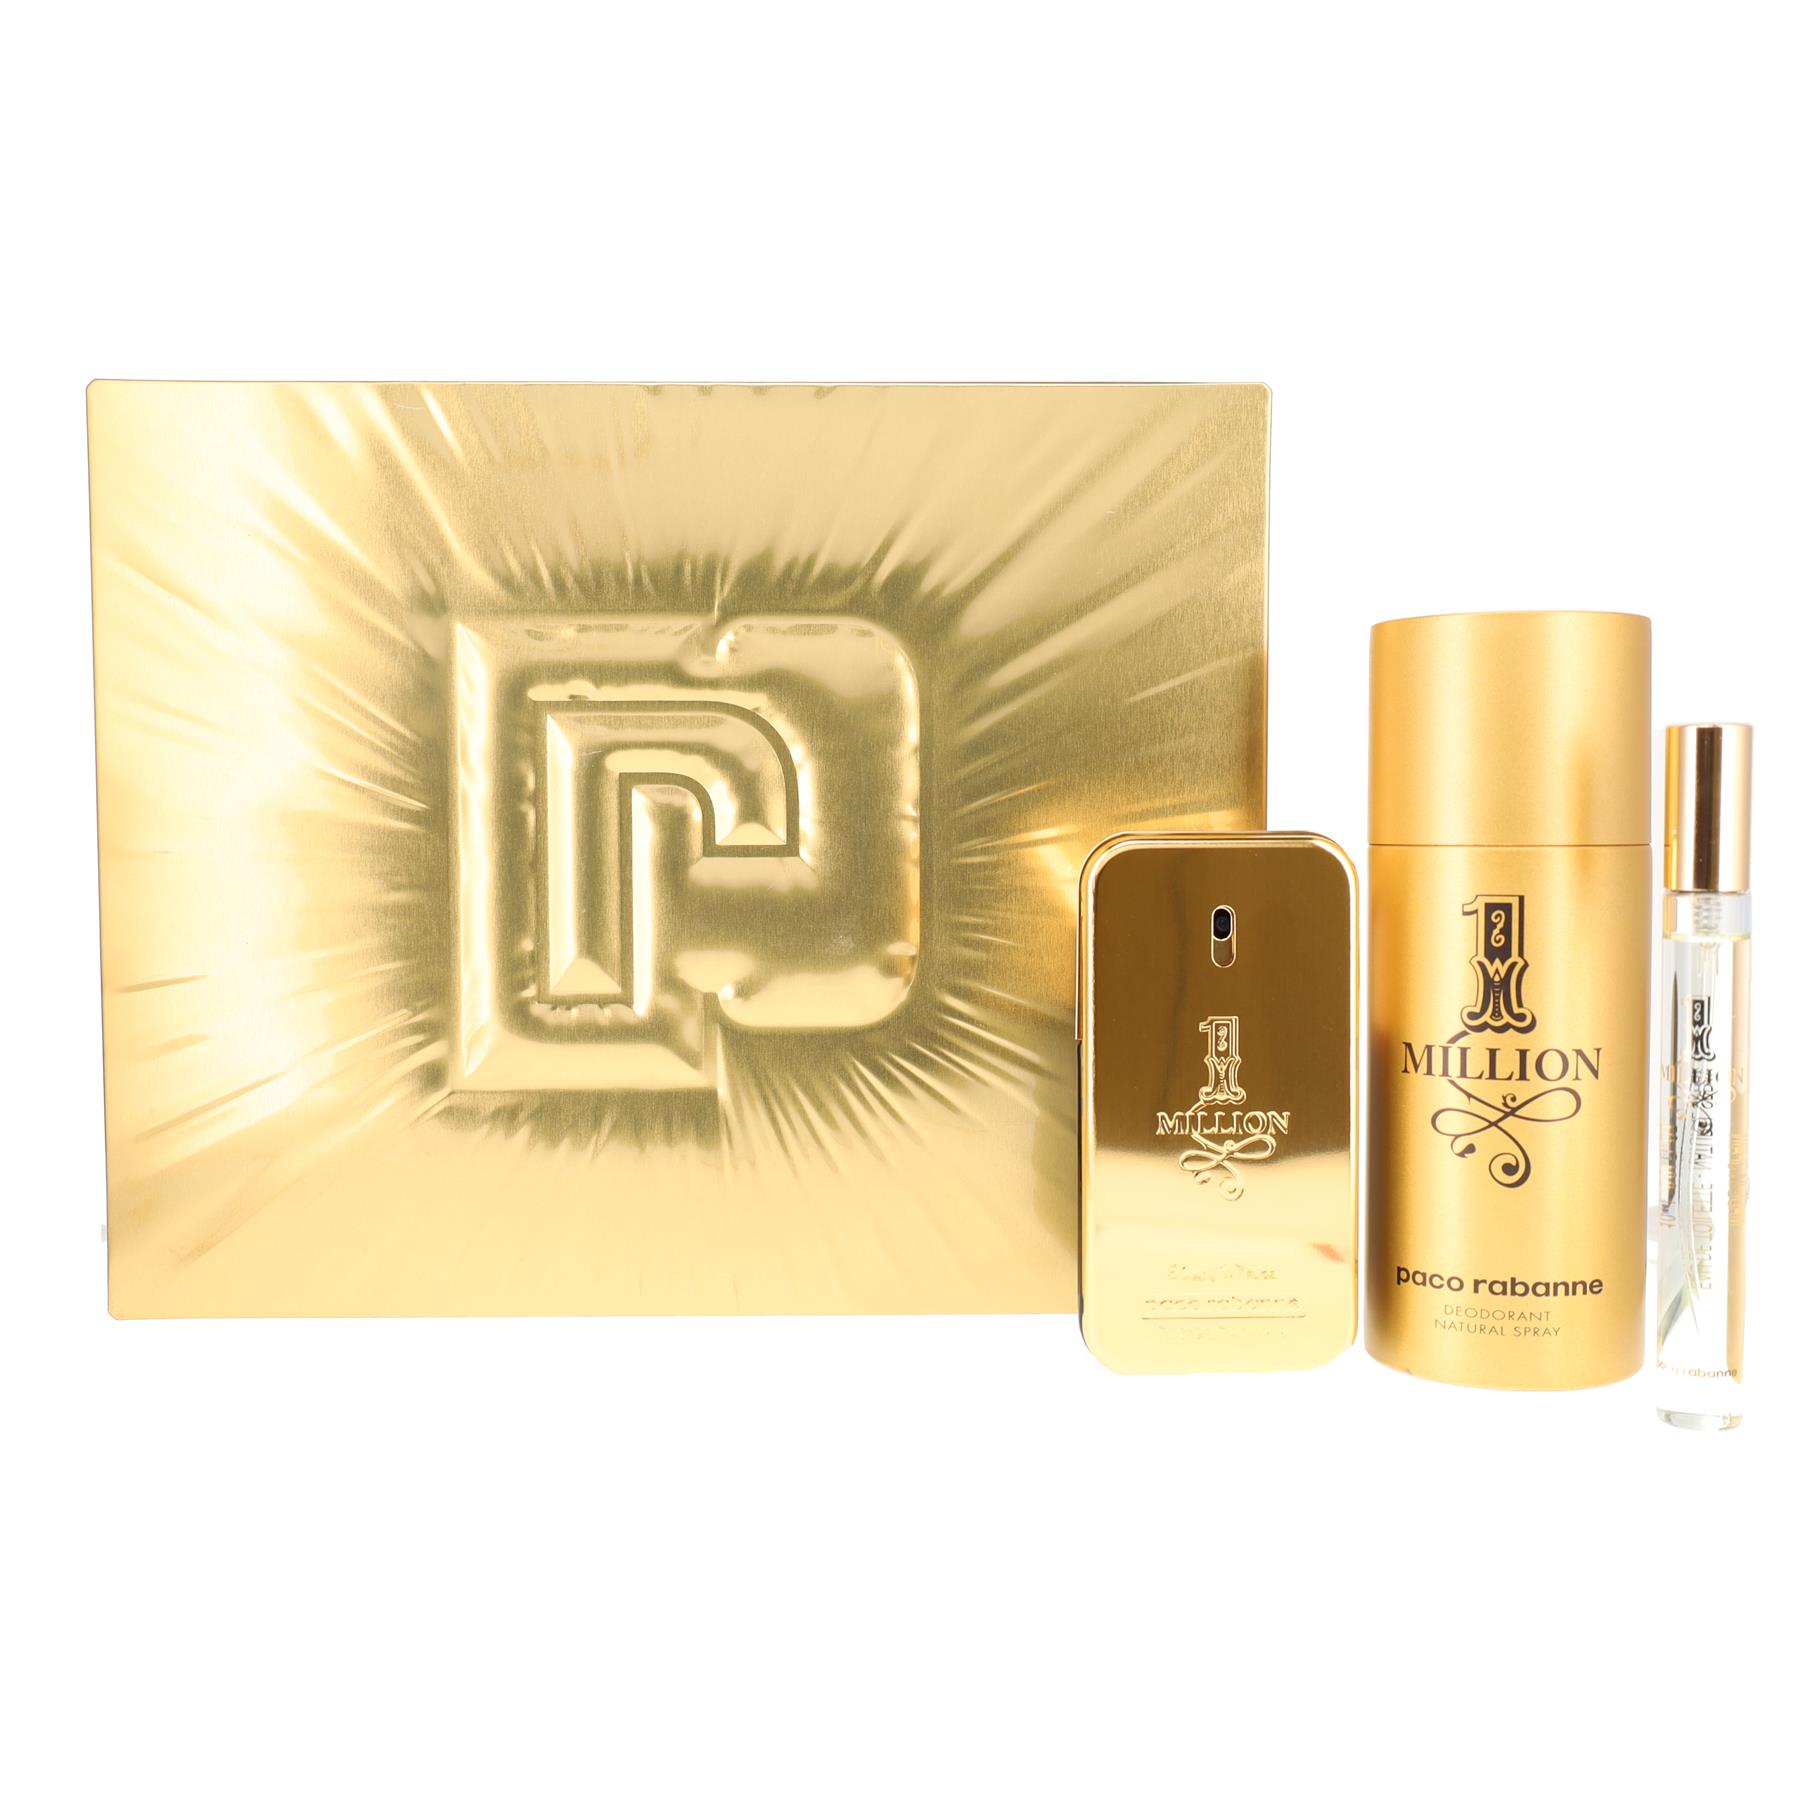 Paco Rabanne 1 Million 50ml Eau de Toilette Gift Set 150ml Deodorant Spray, 10ml Eau de Toilette... from Perfume Plus Direct